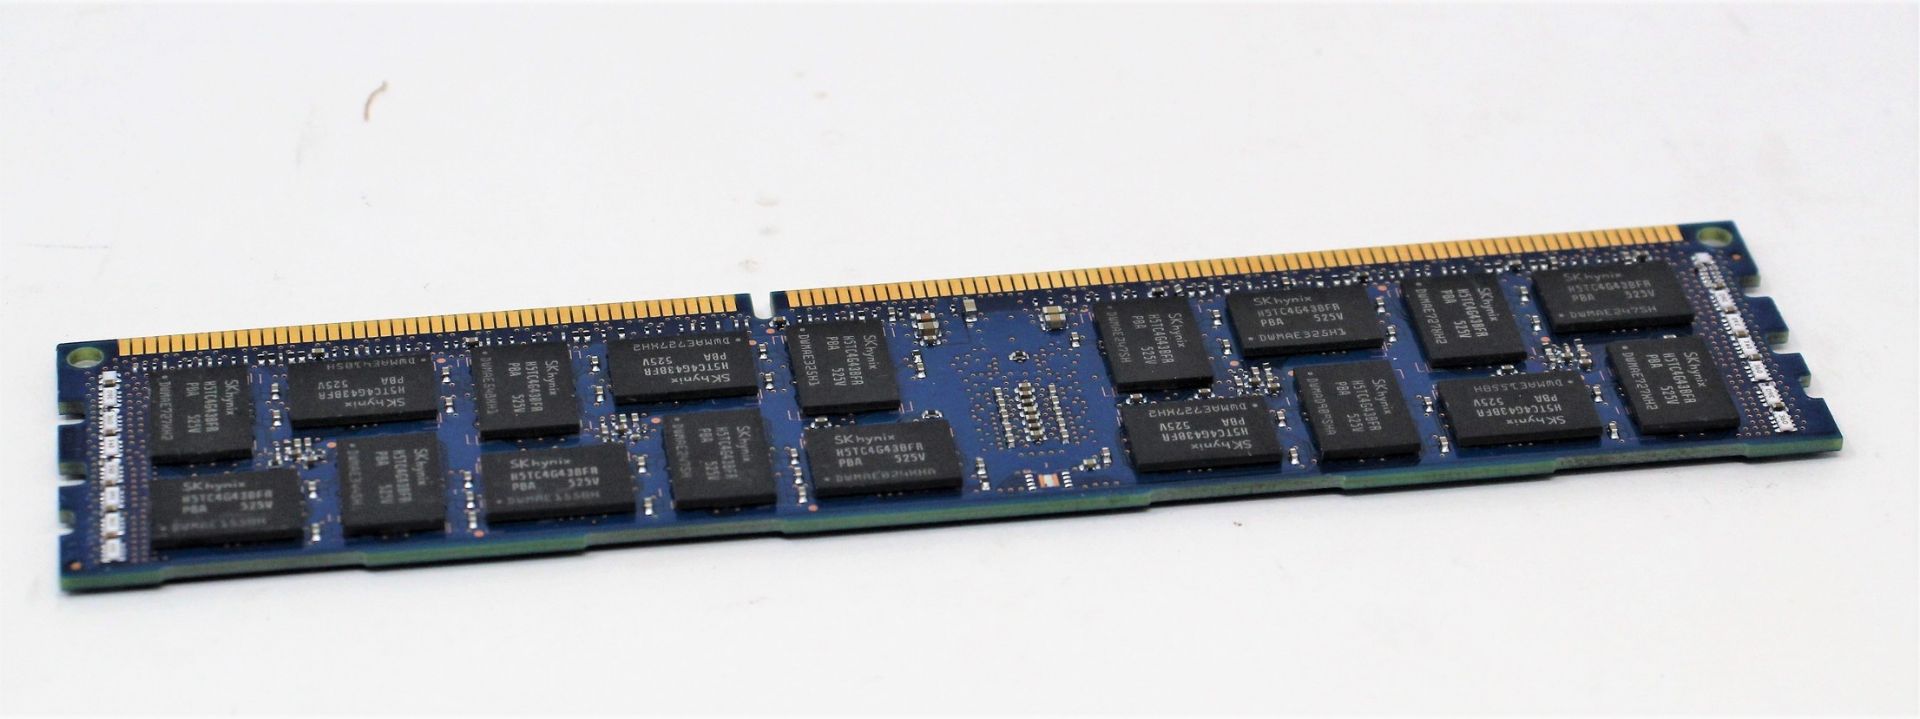 Ten pre-owned Hynix 16GB 2RX4 PC3L-12800R DDR3 Server Memory Modules (P/N: HMT42GR7BFR4A).